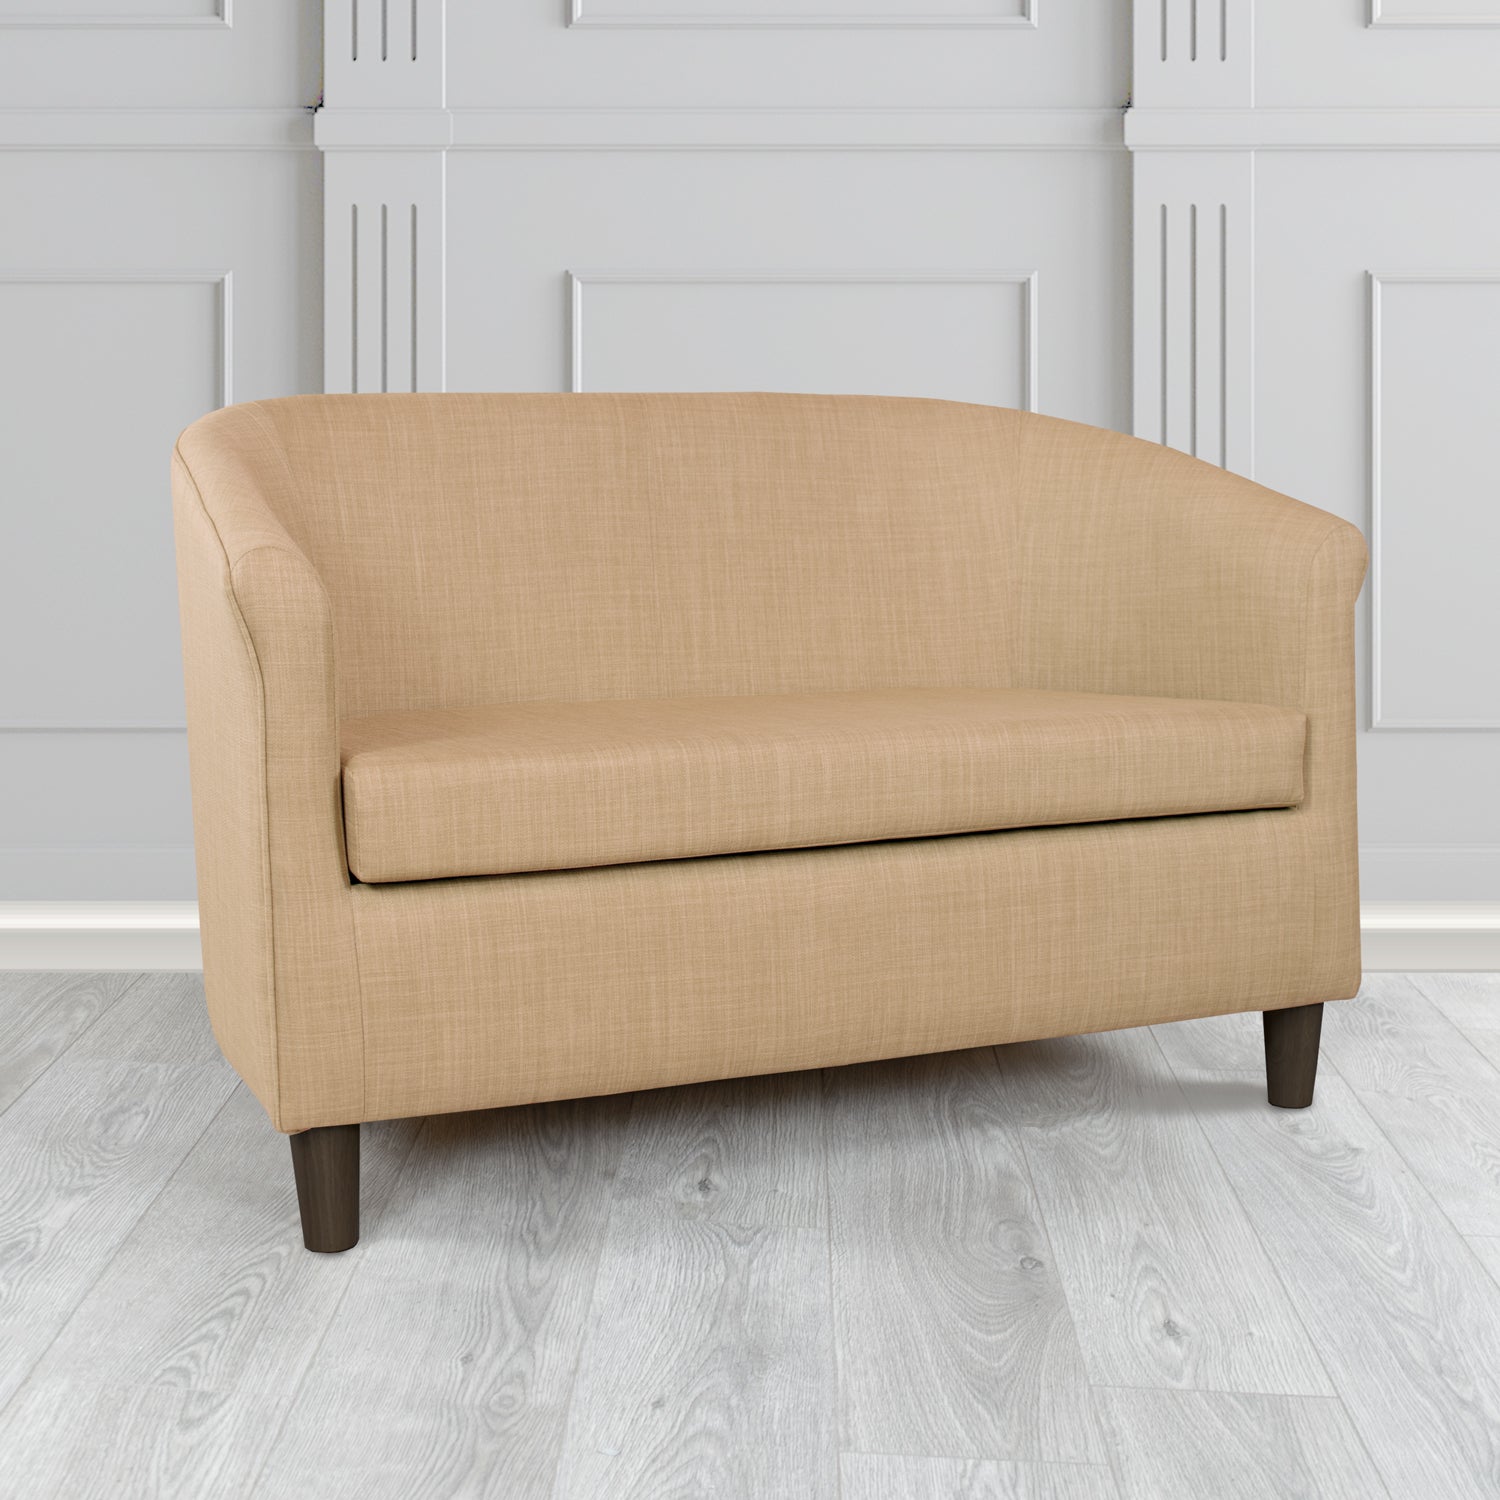 Tuscany Charles Honey Plain Linen Fabric 2 Seater Tub Sofa - The Tub Chair Shop